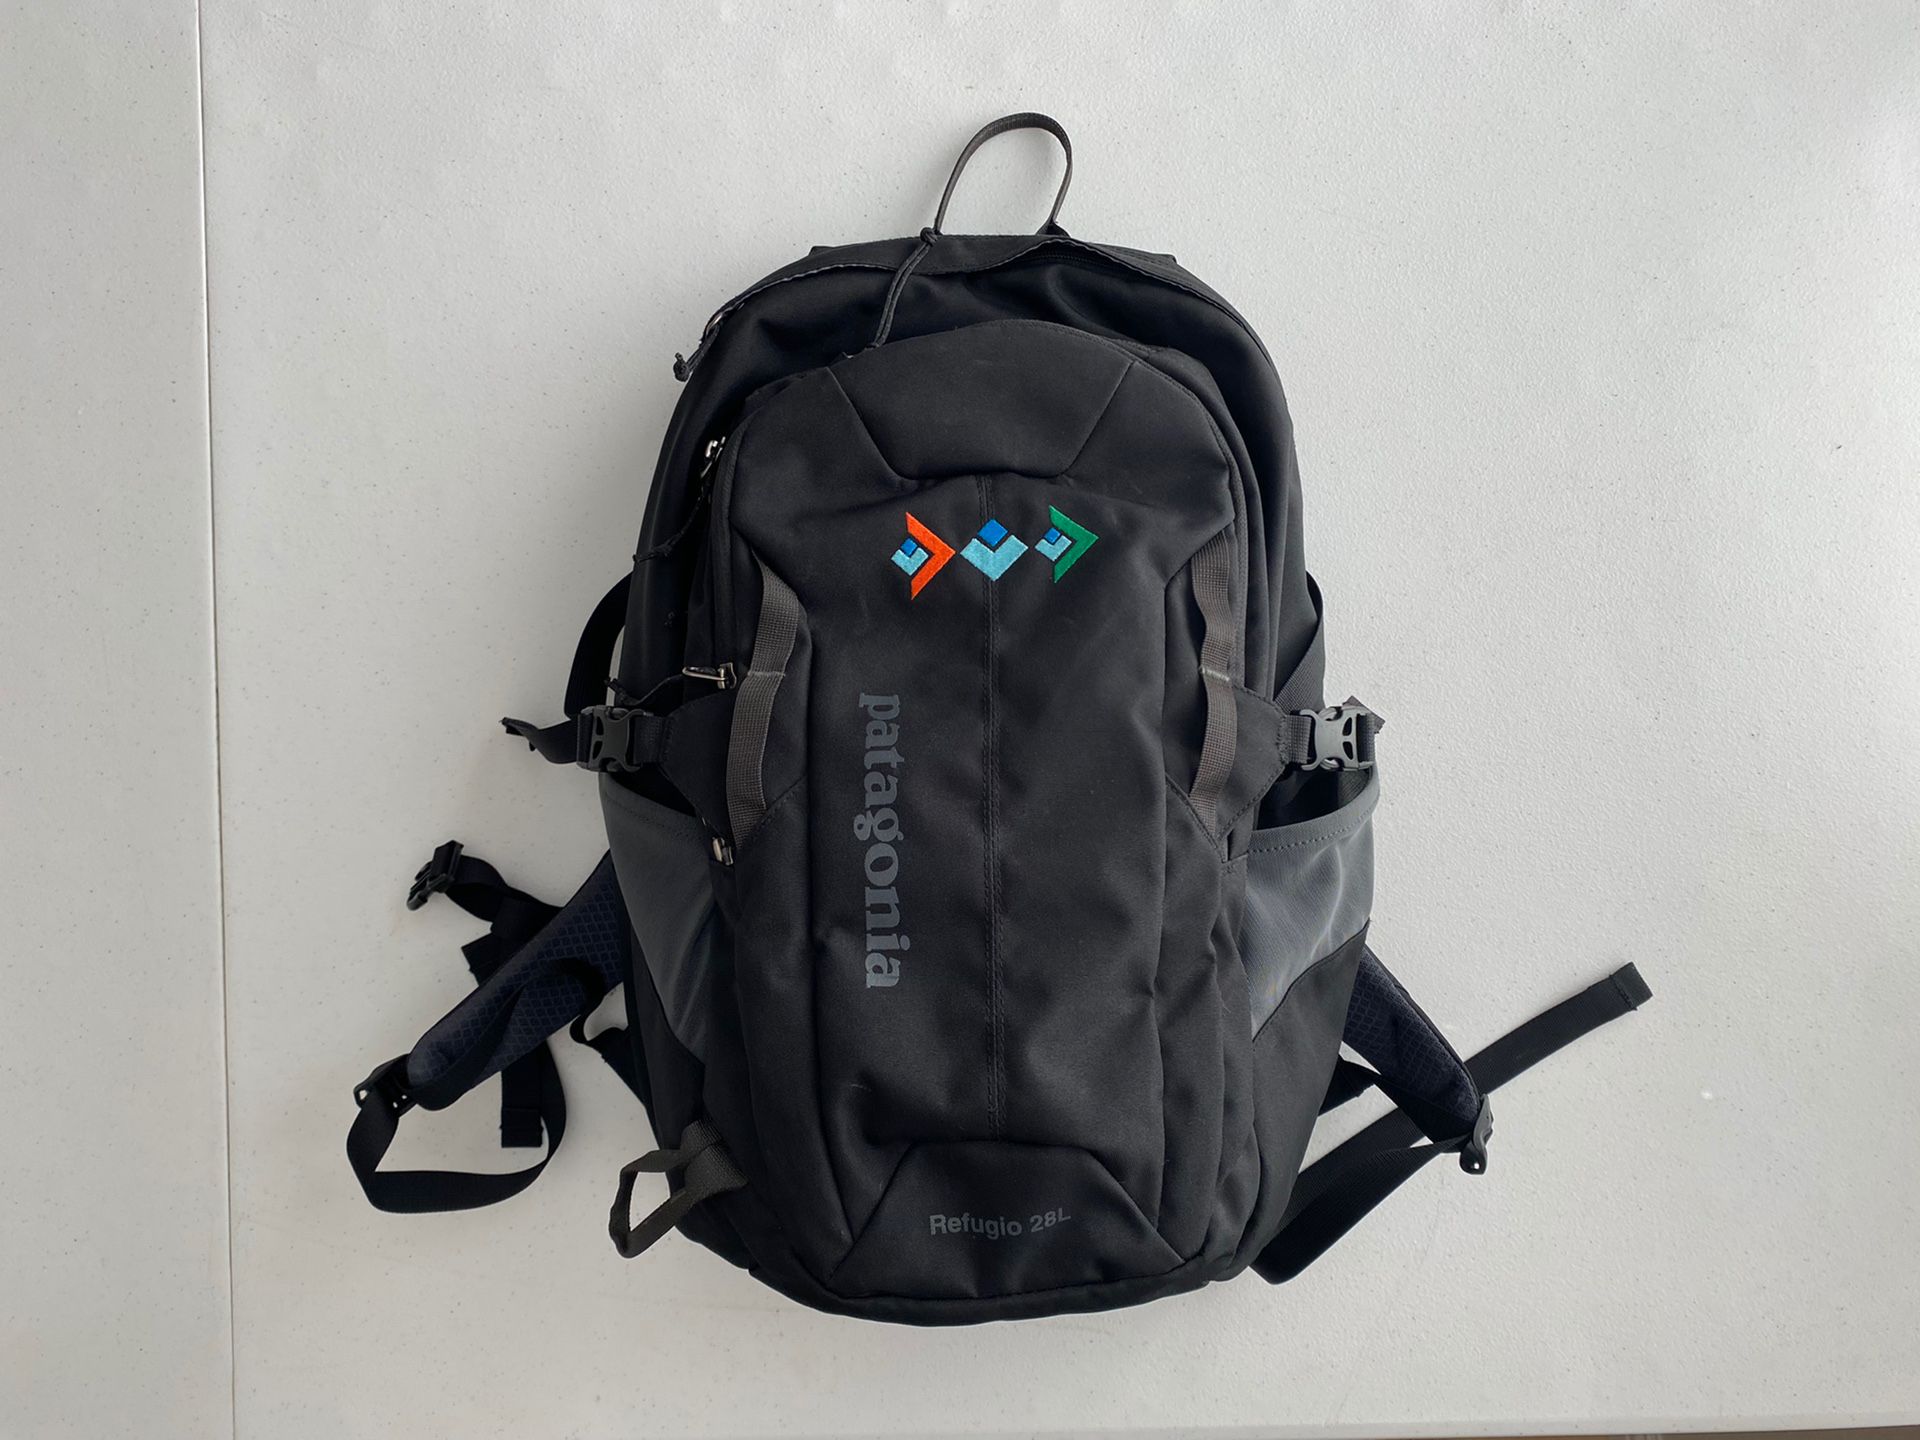 Patagonia Refugio Hiking Backpack 28L (black) - Travel Laptop Bag School